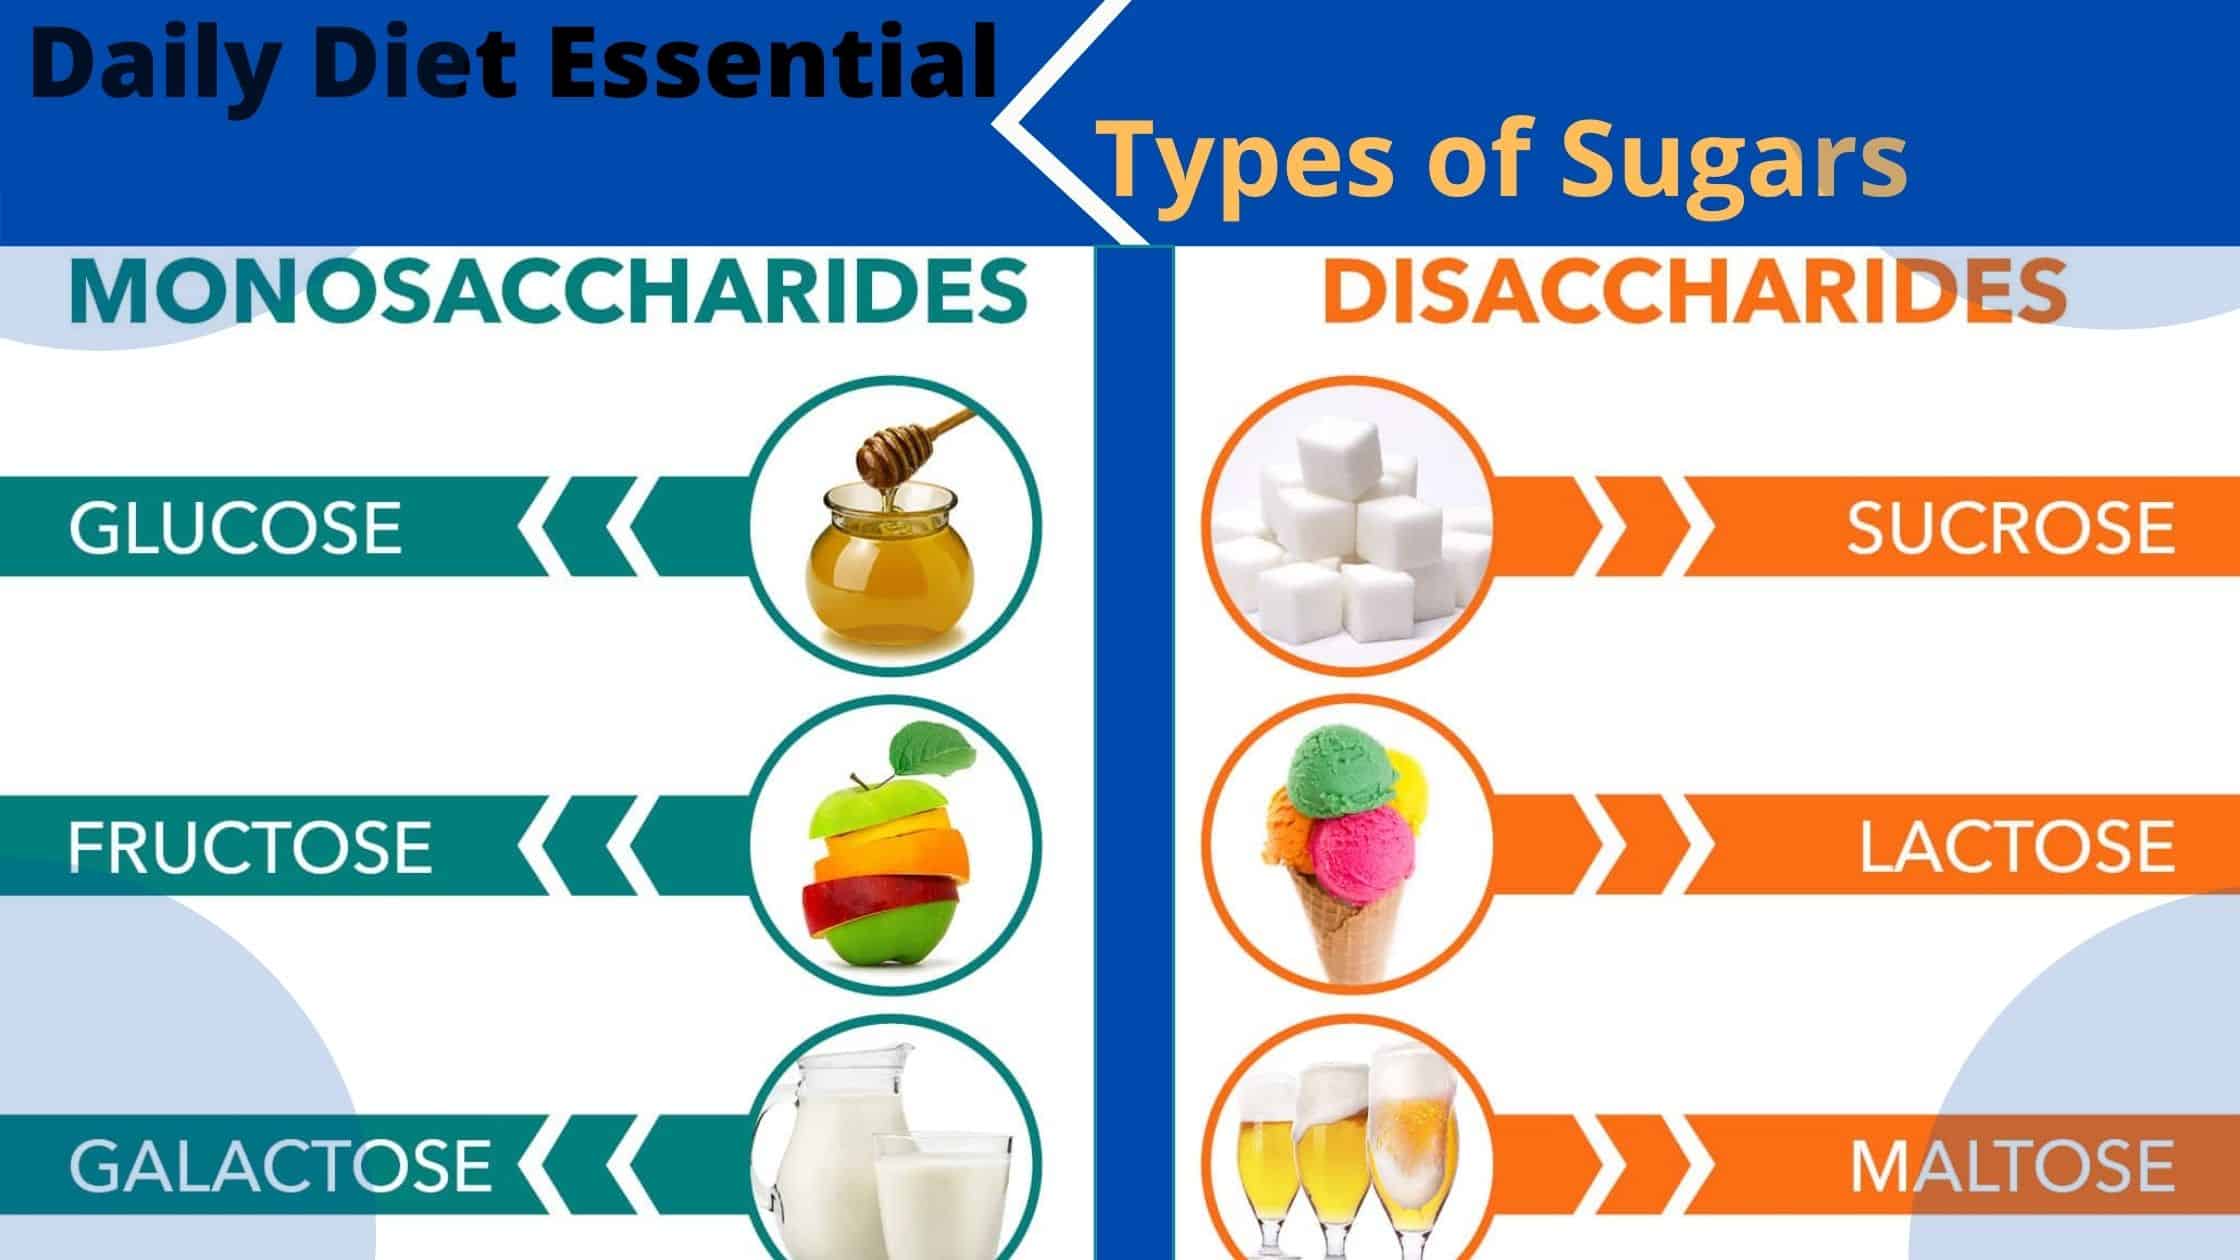 Types of sugars